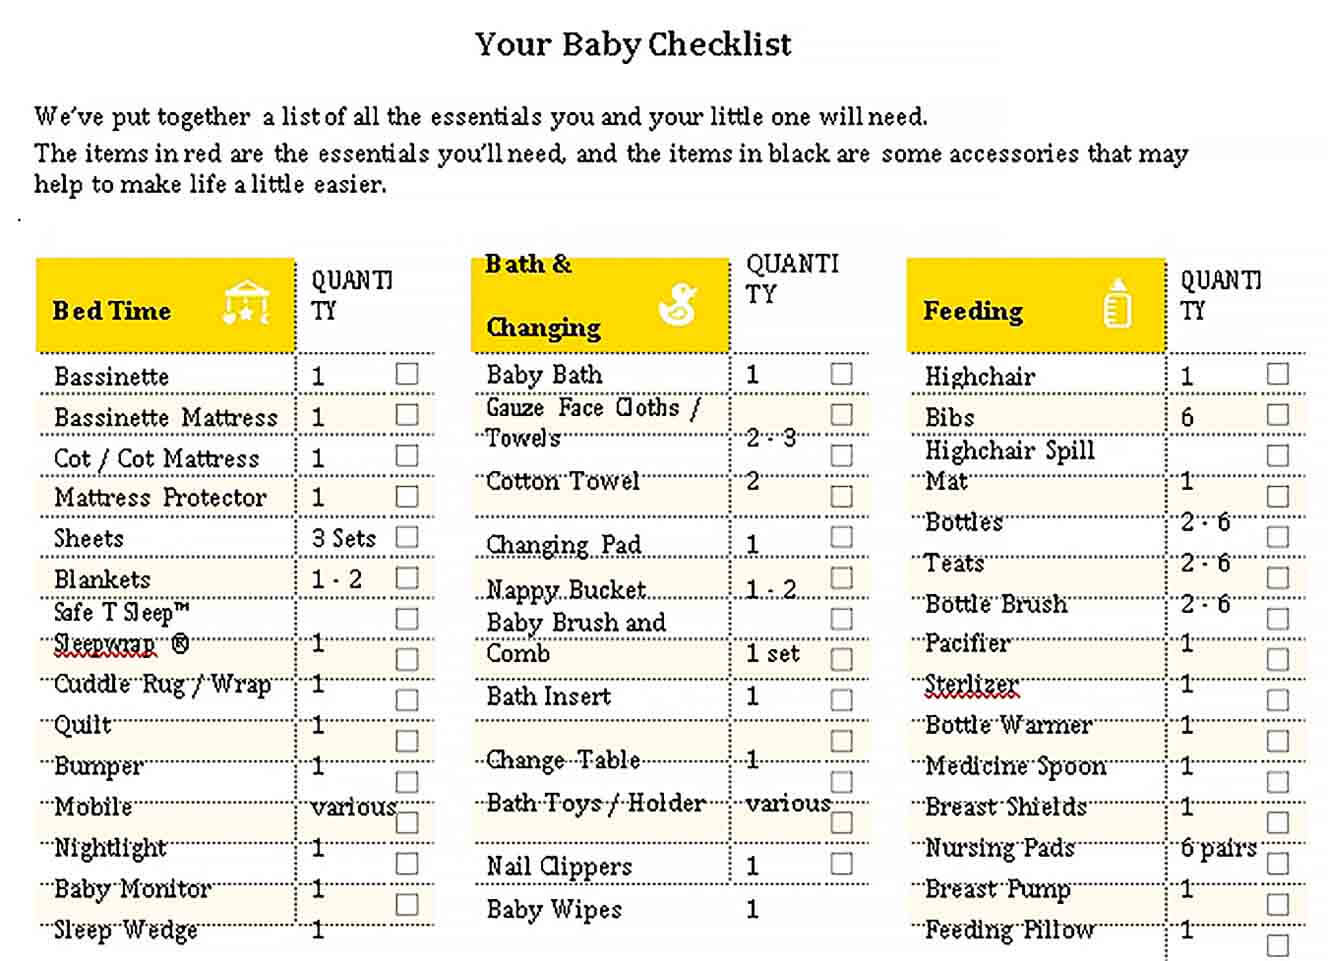 Sample Printable New Baby Checklist